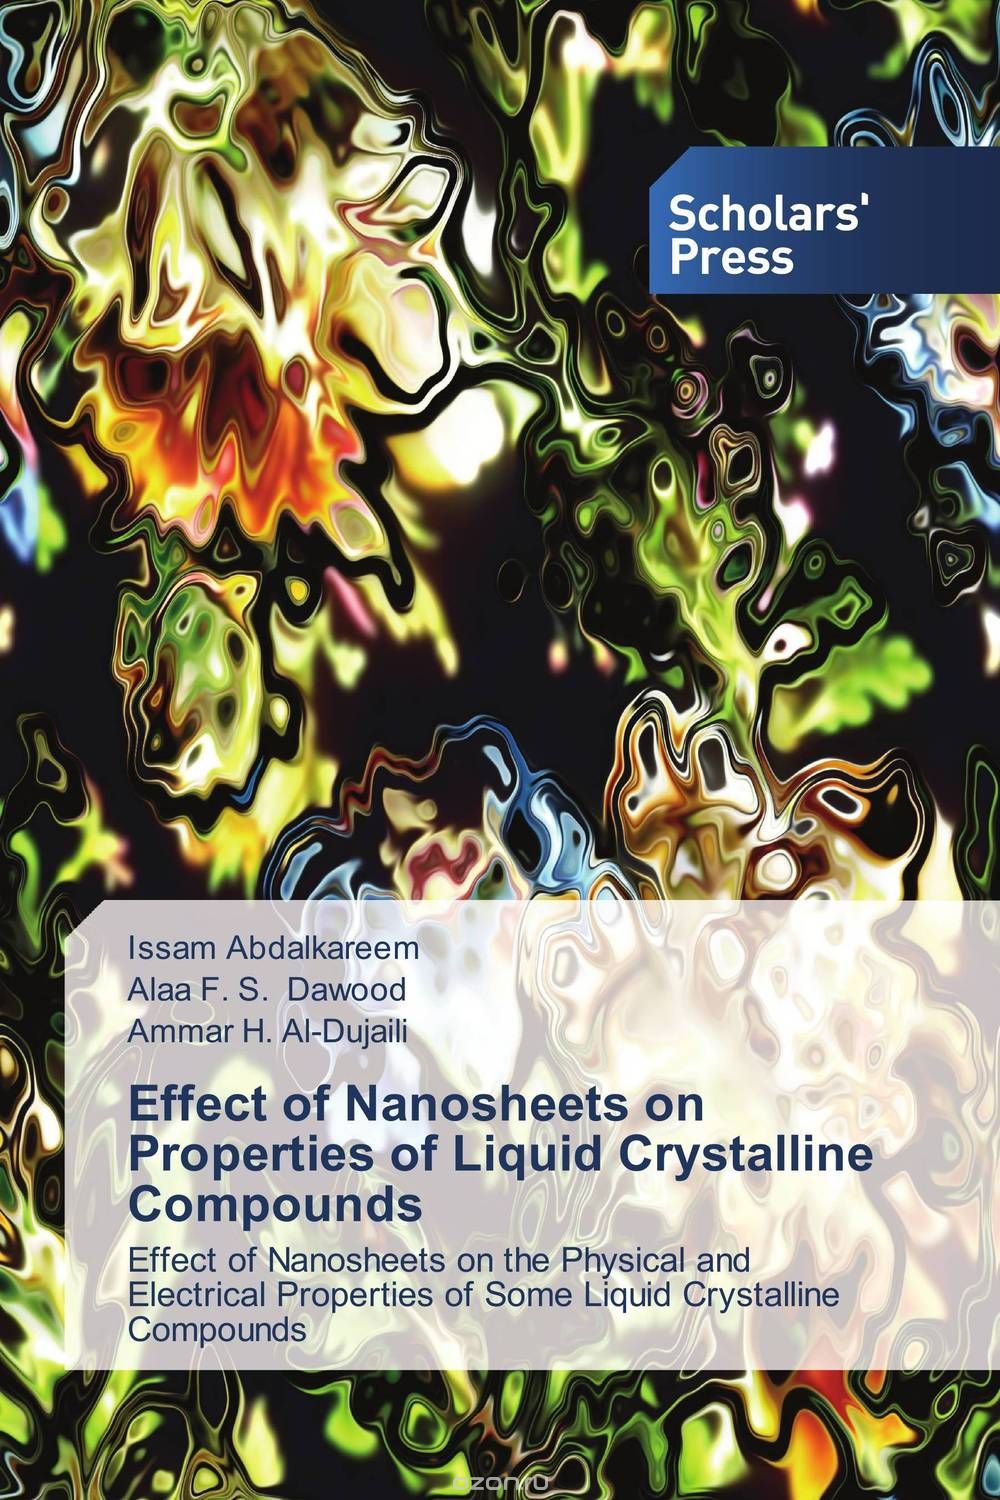 Скачать книгу "Effect of Nanosheets on Properties of Liquid Crystalline Compounds"